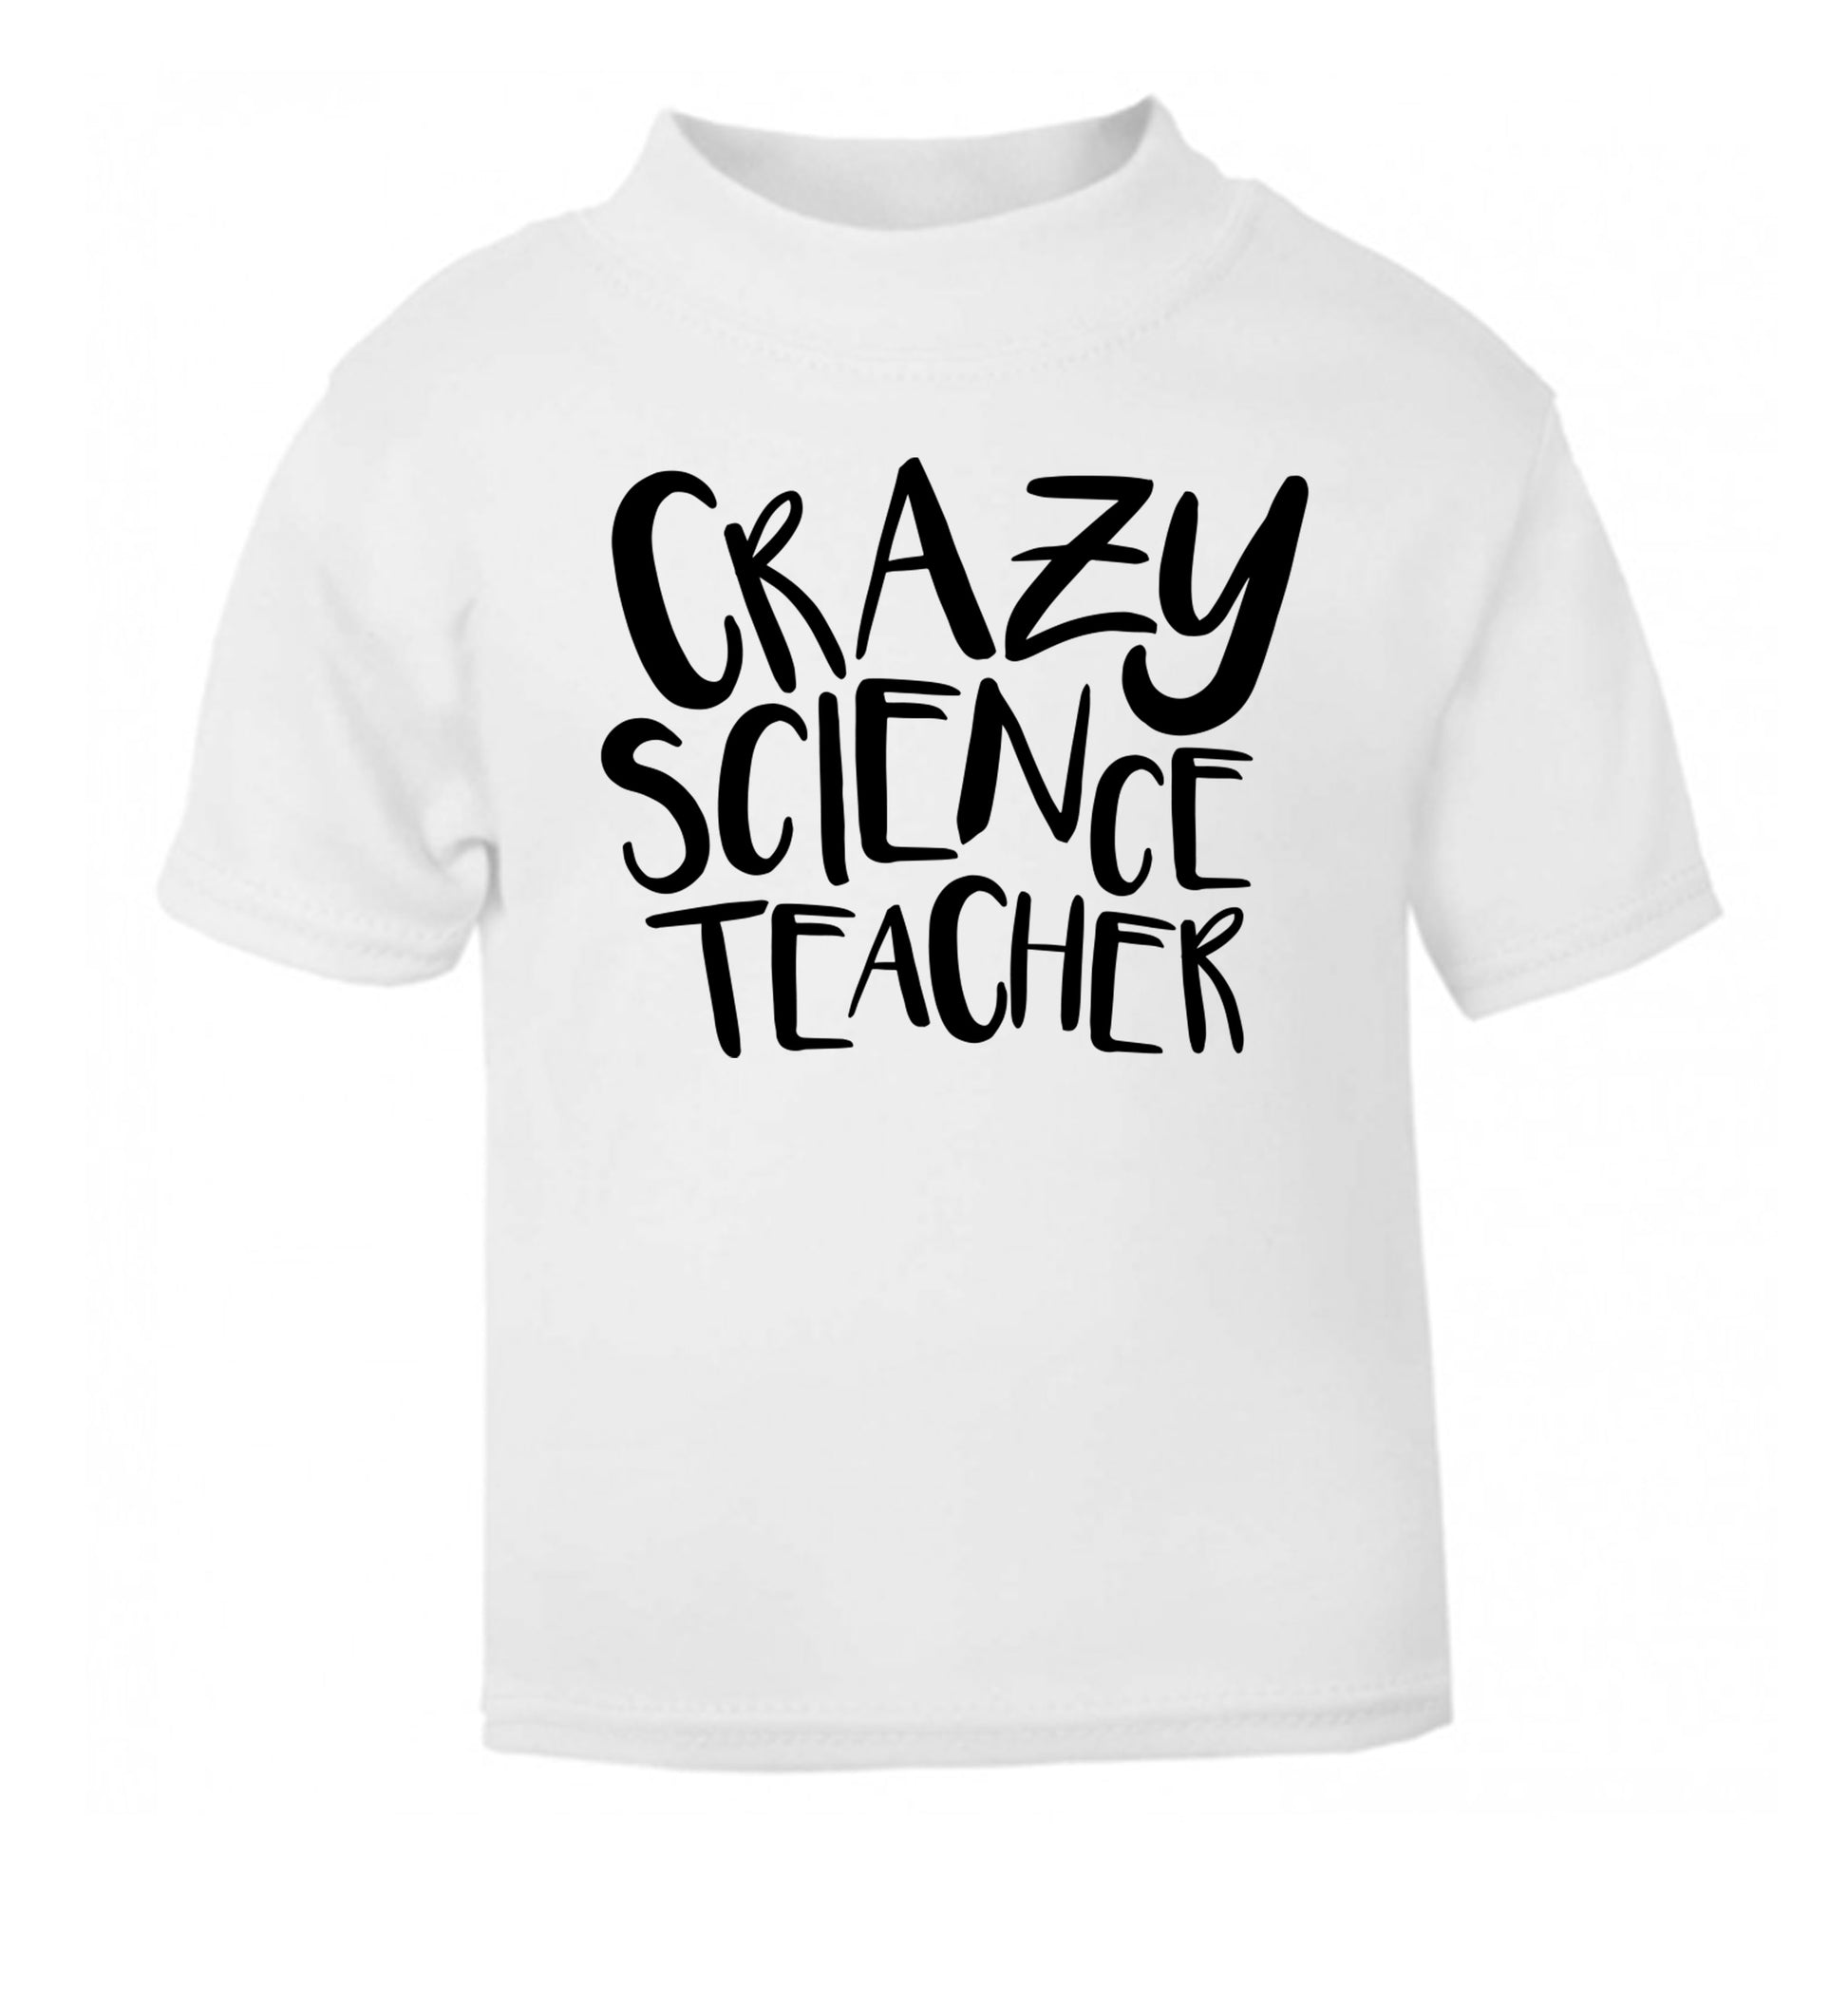 Crazy science teacher white Baby Toddler Tshirt 2 Years